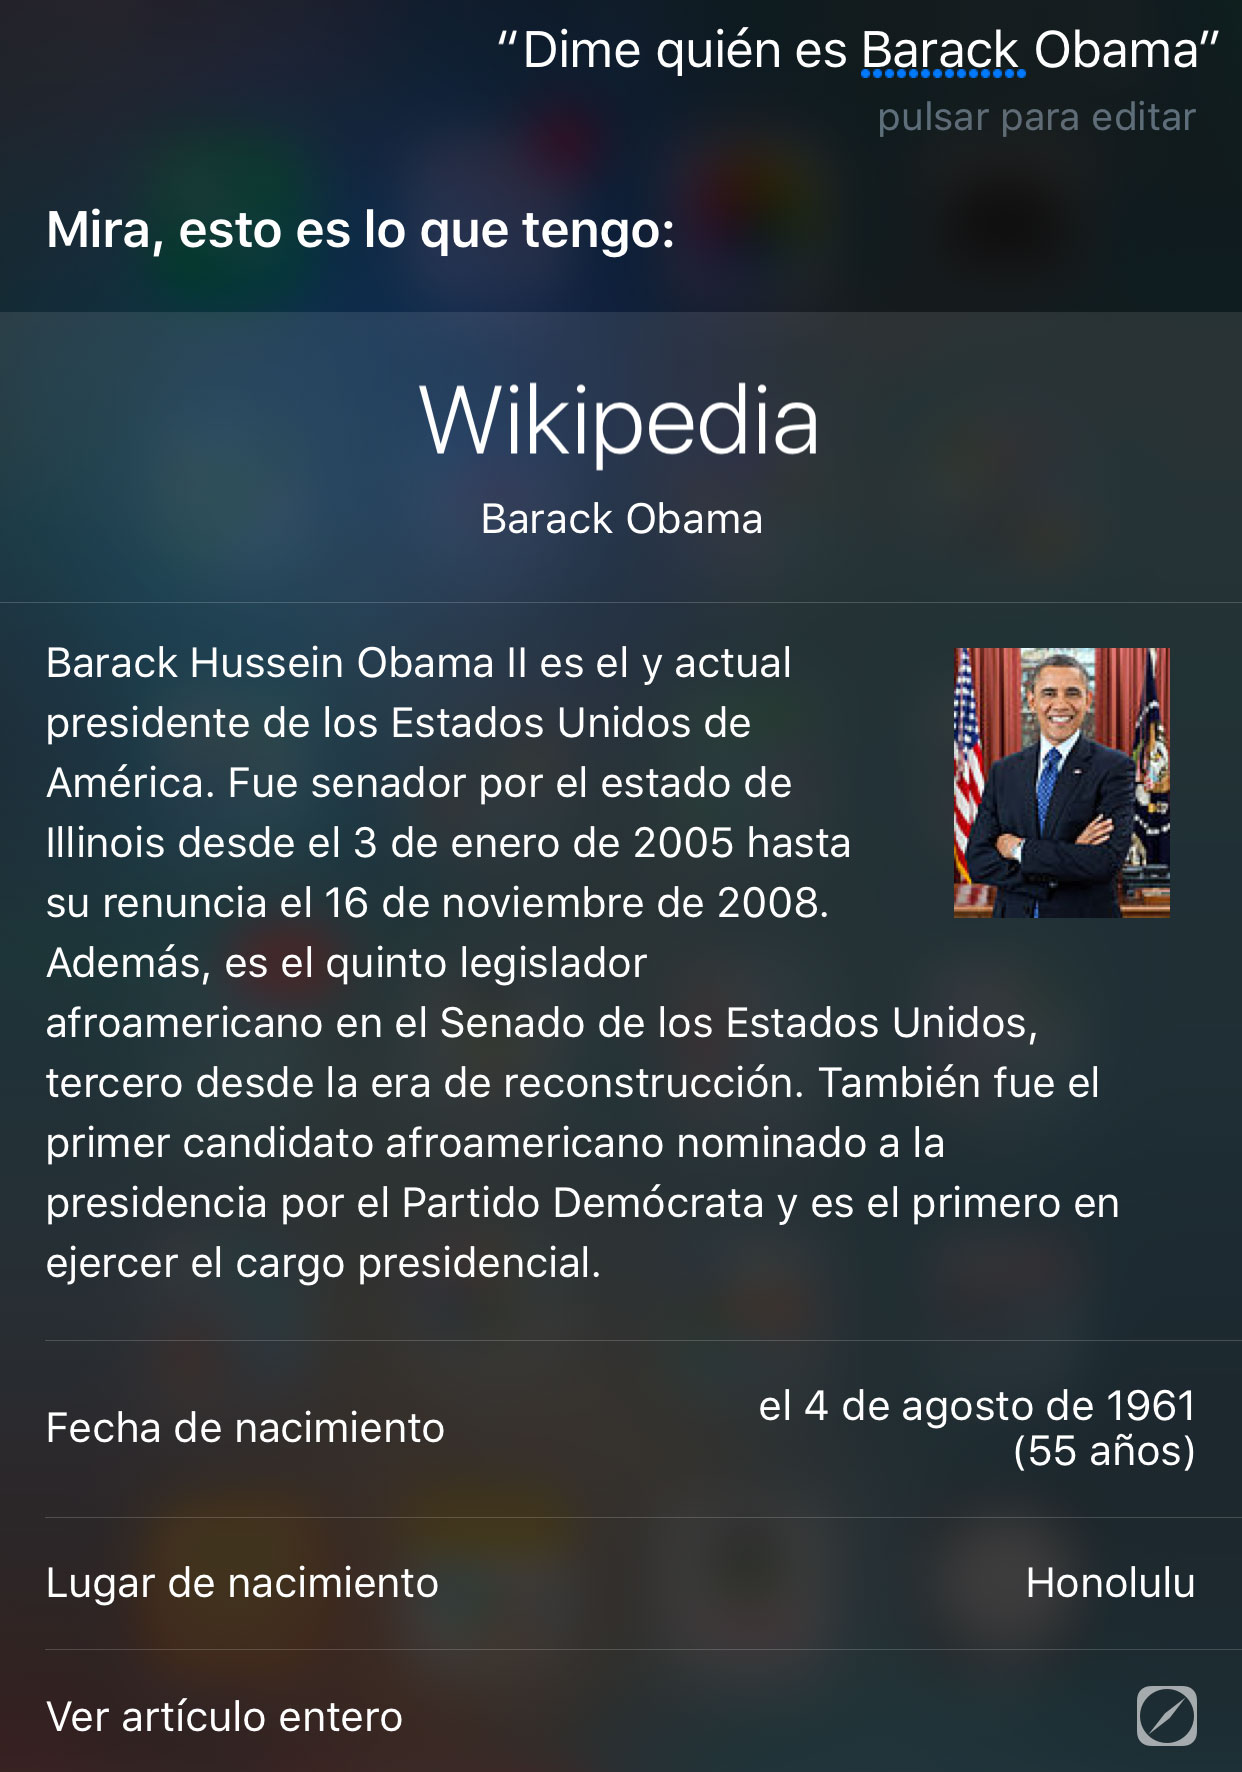 Preguntando a Siri quién es Barack Obama